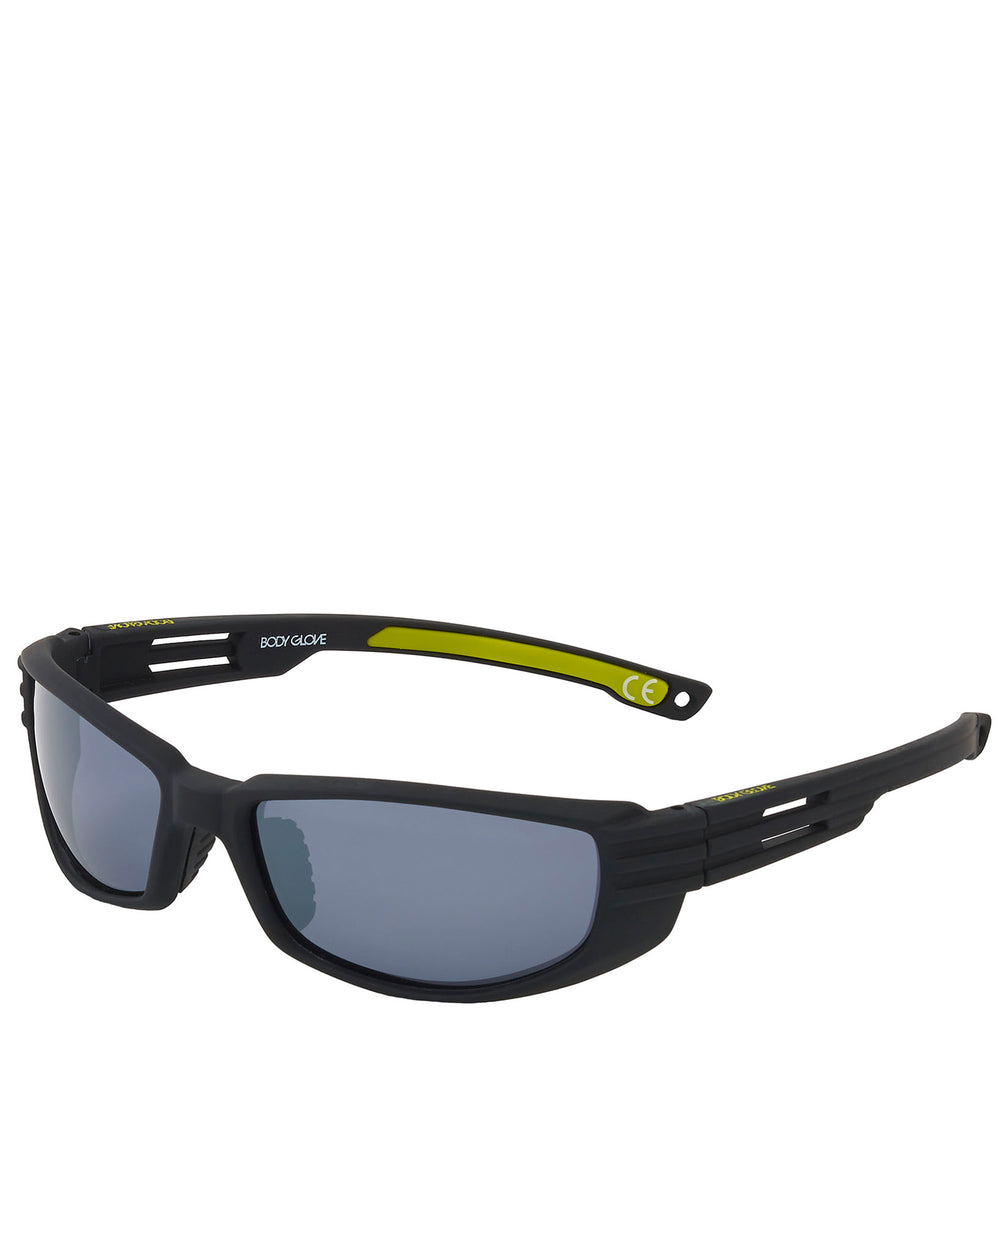 Men's FL20 Floating Polarized Sunglasses - Black